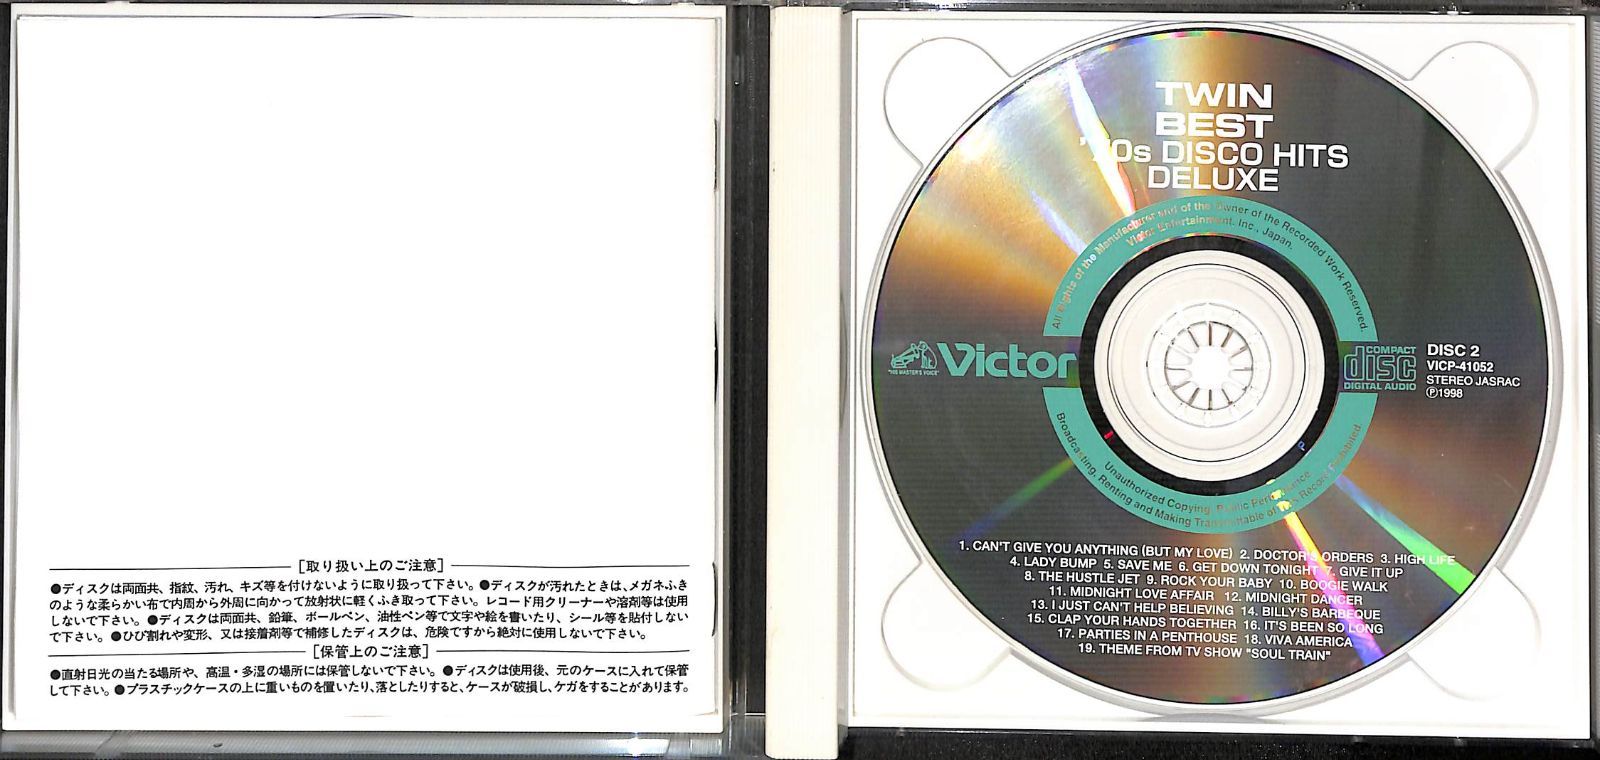 2CD】'70 ディスコ・ヒット '70s DISCO HITS DELUXE Twin Best - メルカリ